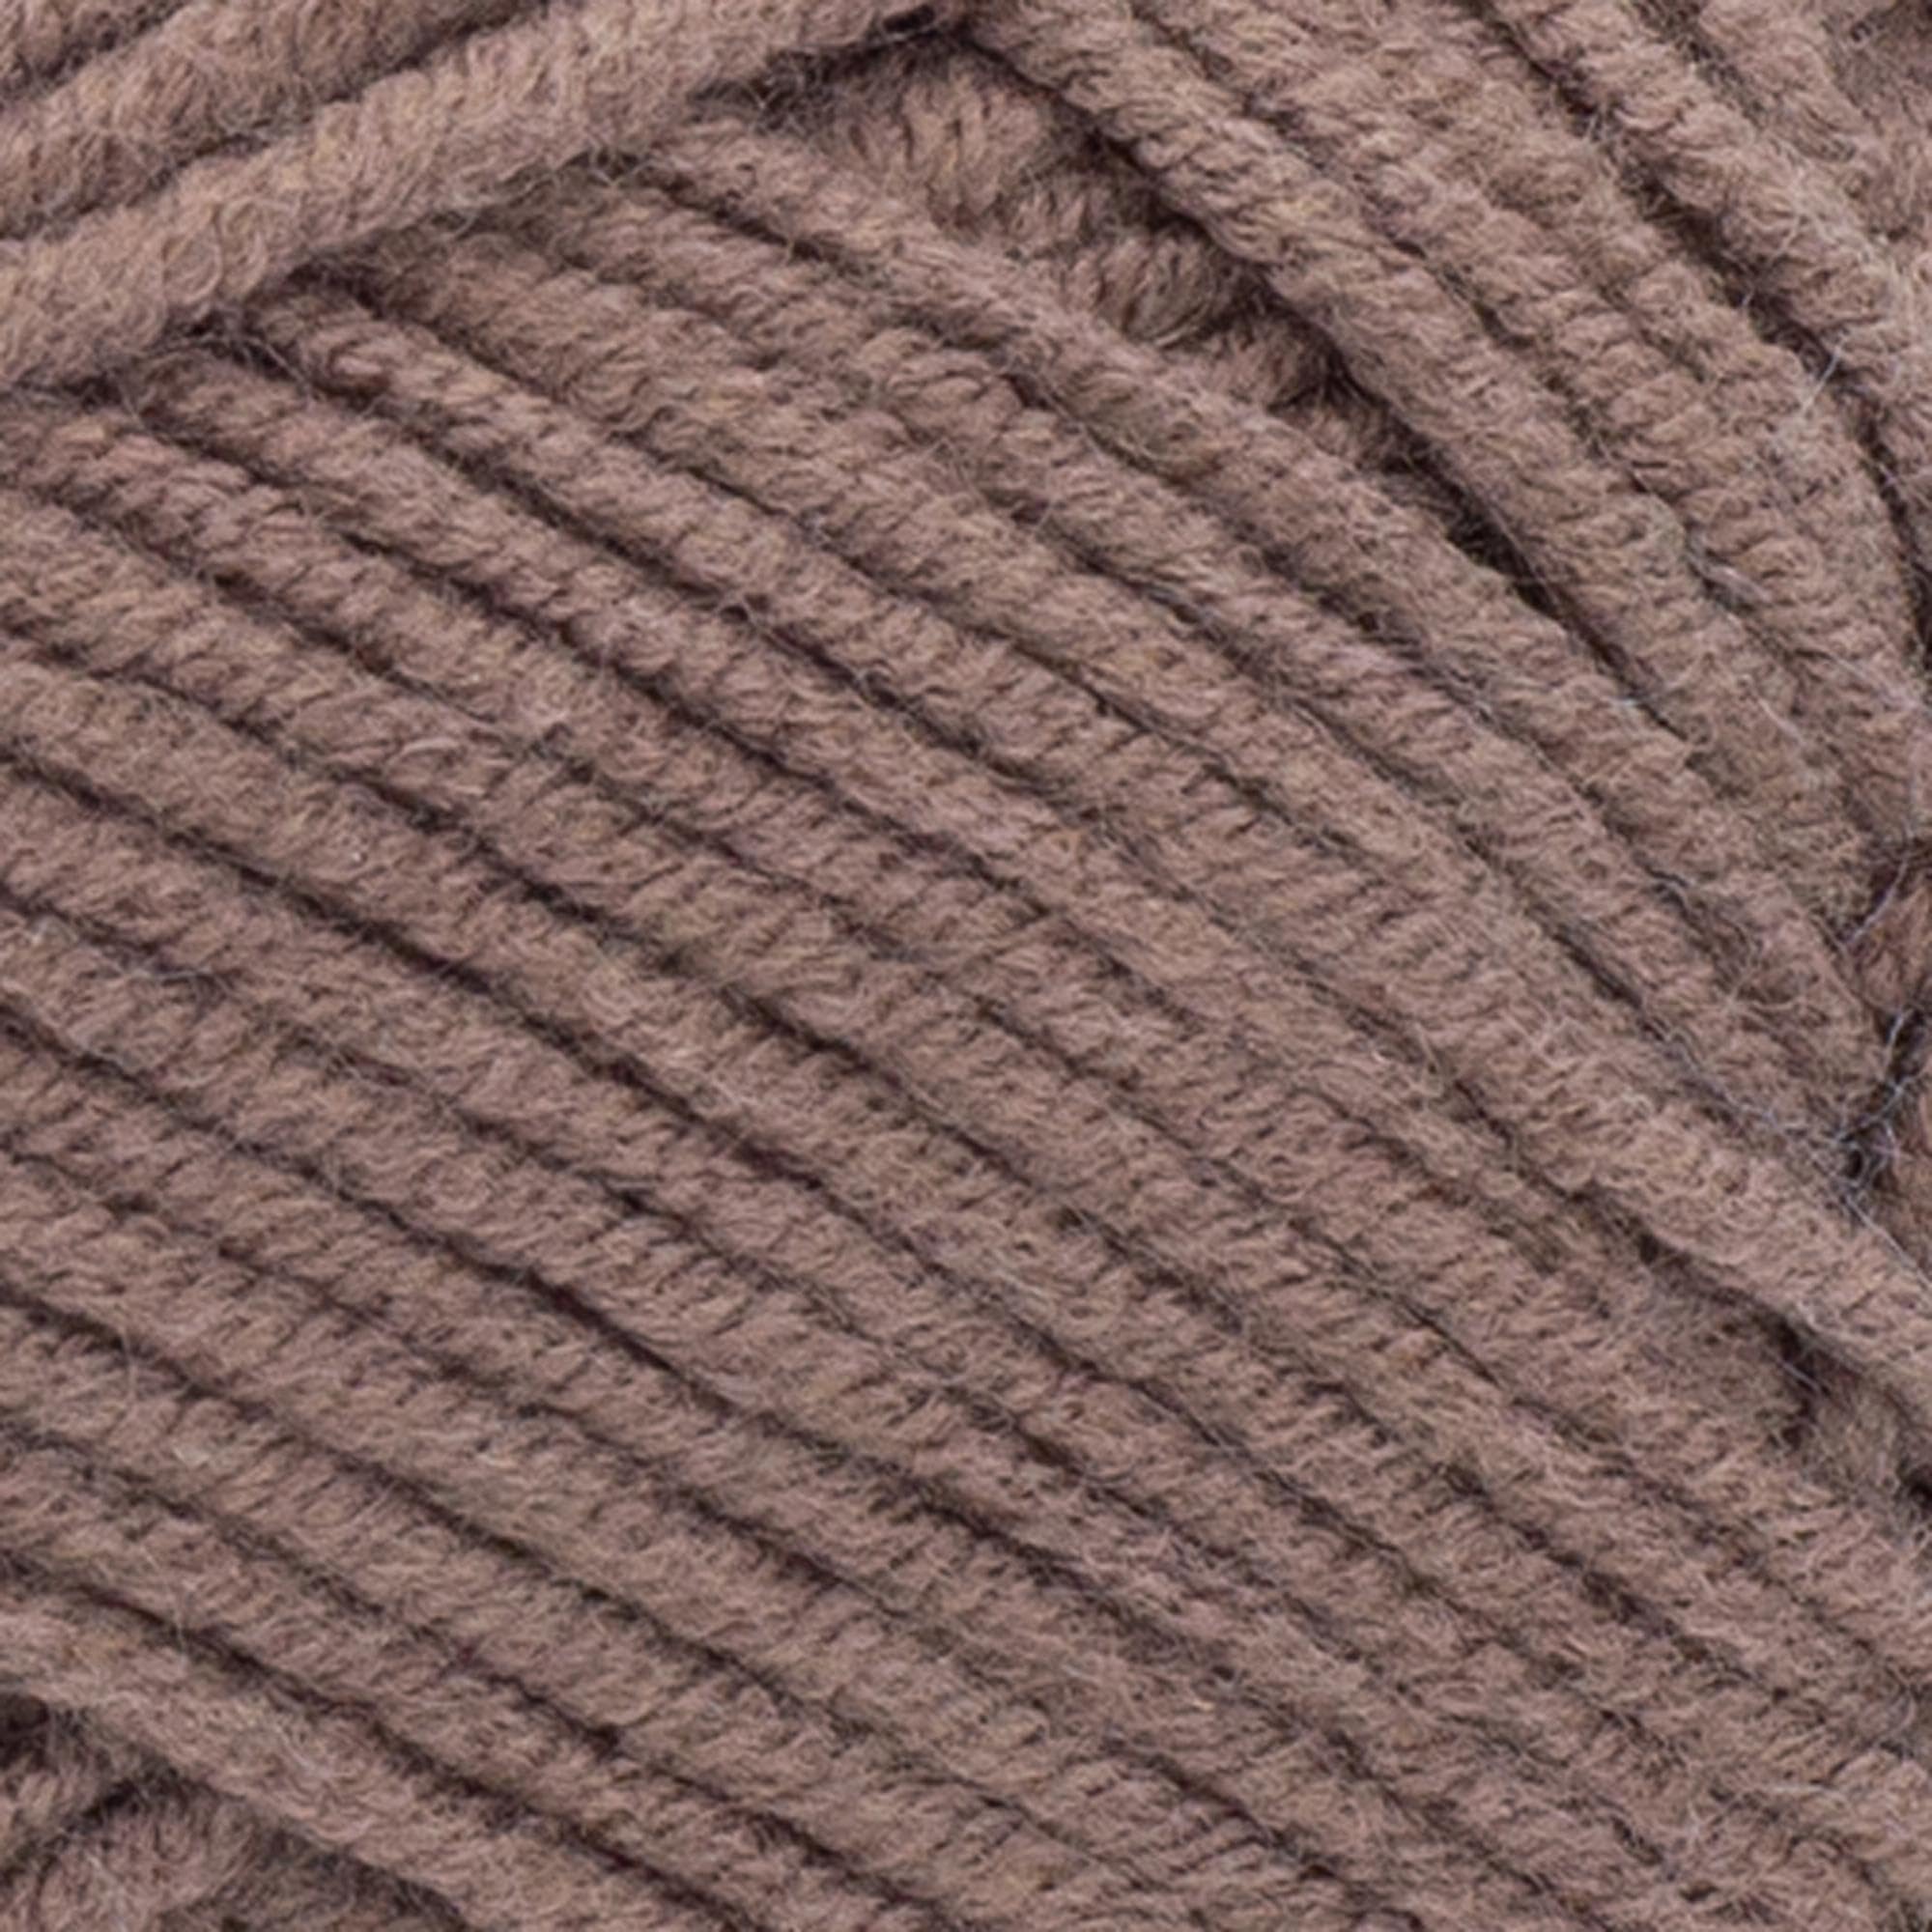 Lion Brand Yarn Tom Daley-The Cottony One Yarn, Hot Cocoa